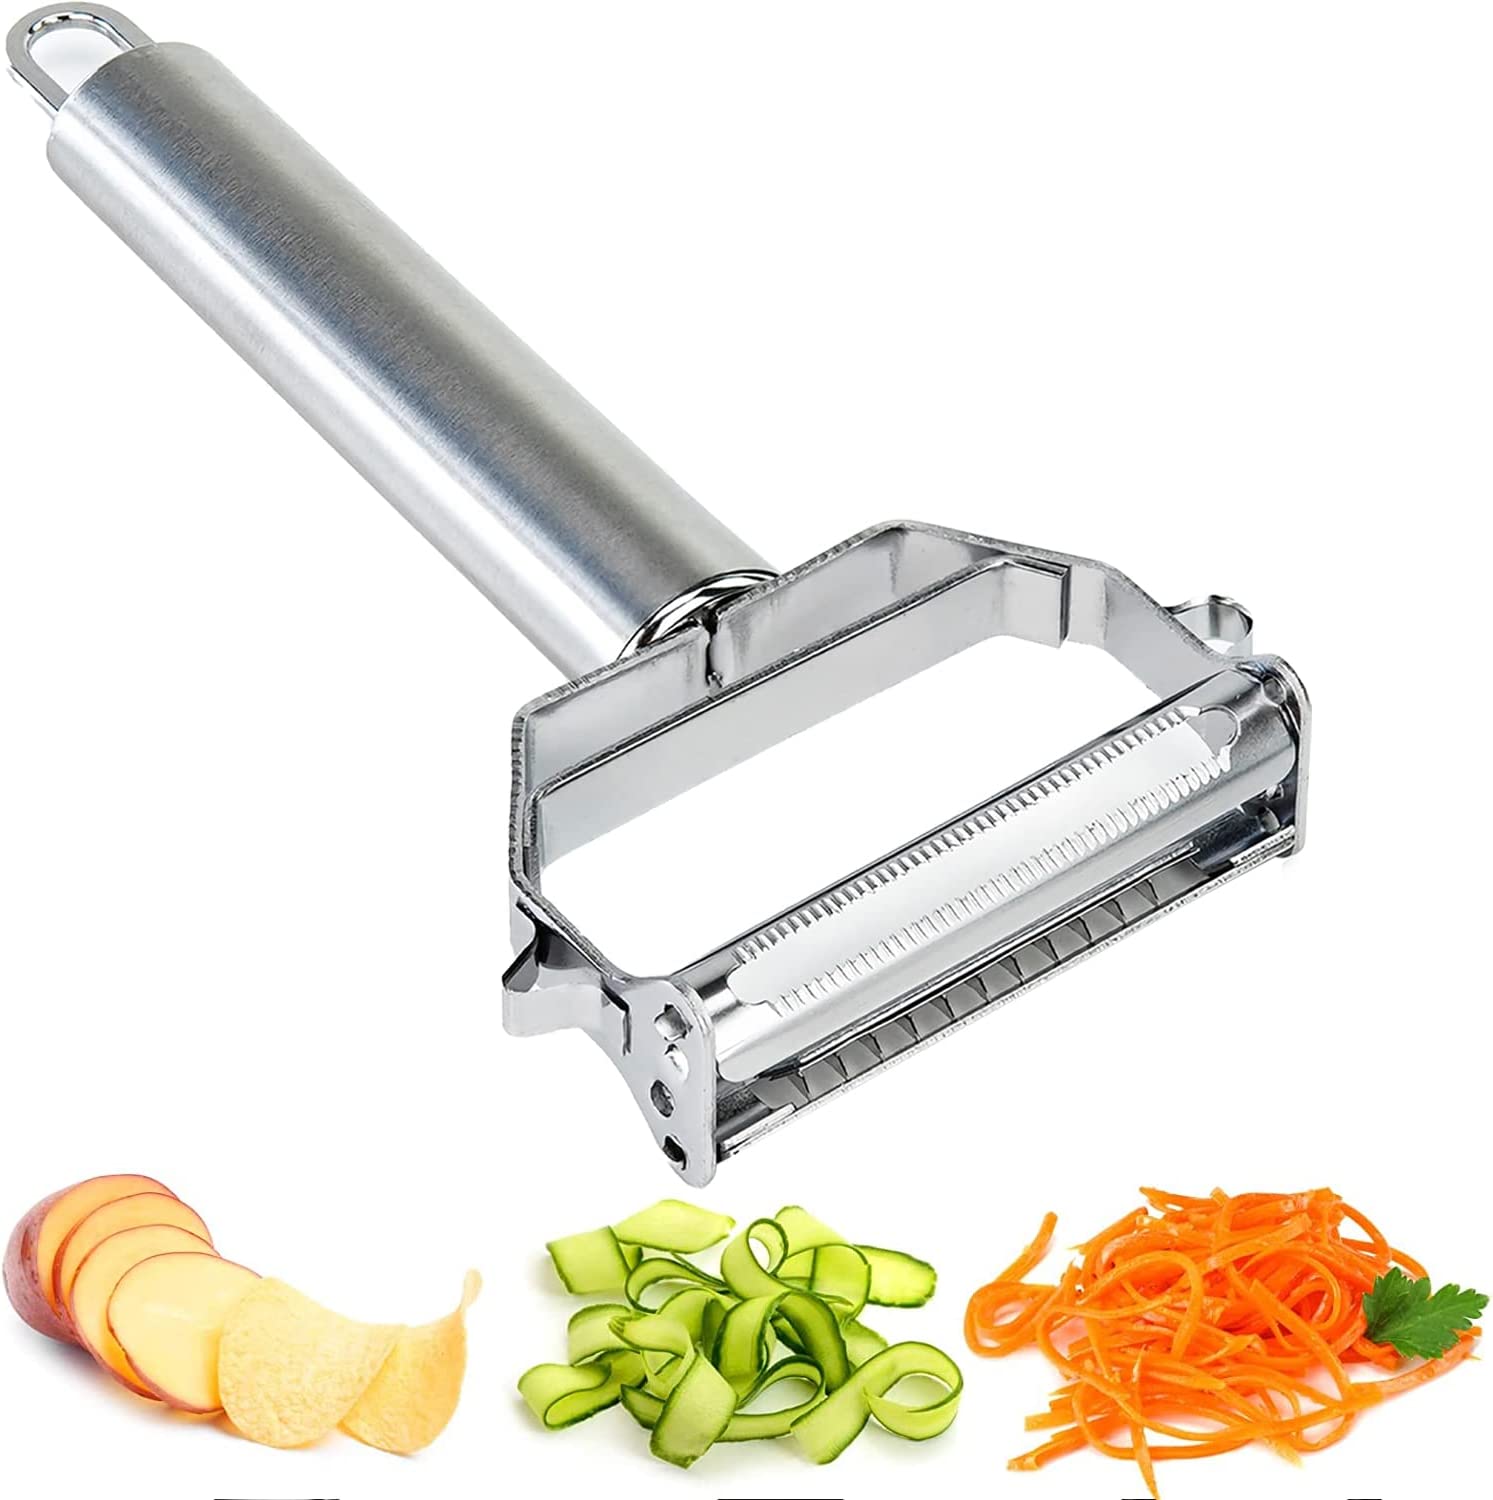 Sunkuka Julienne Peeler Stainless Steel Cutter Slicer with Cleaning Brush  Pro for Carrot Potato Melon Gadget Vegetable Fruit